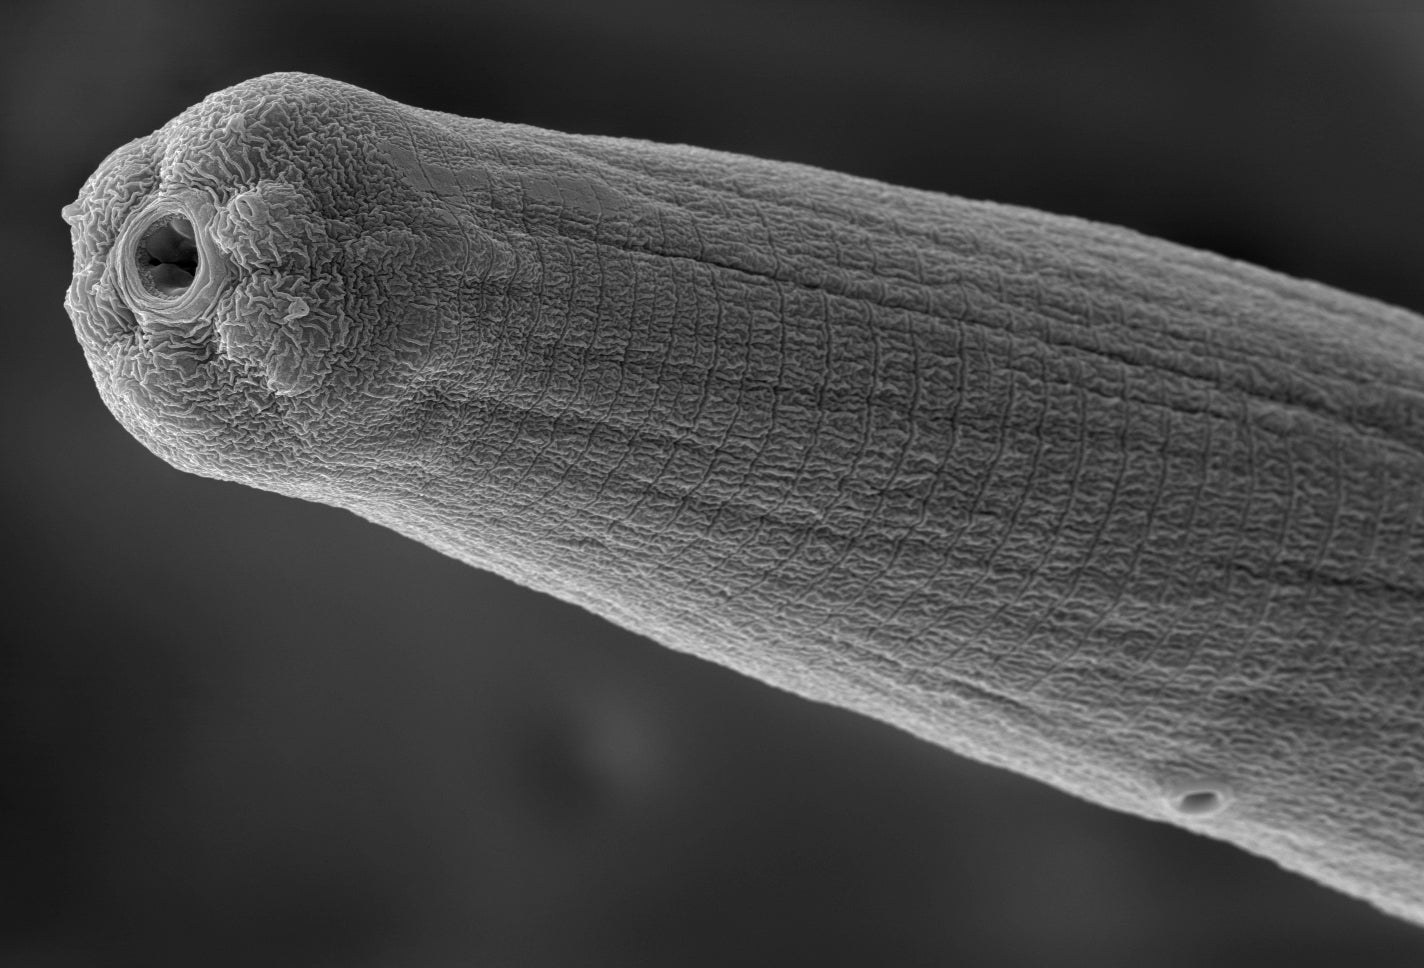 Petri dishes don't make good hosts for parasitic nematodes